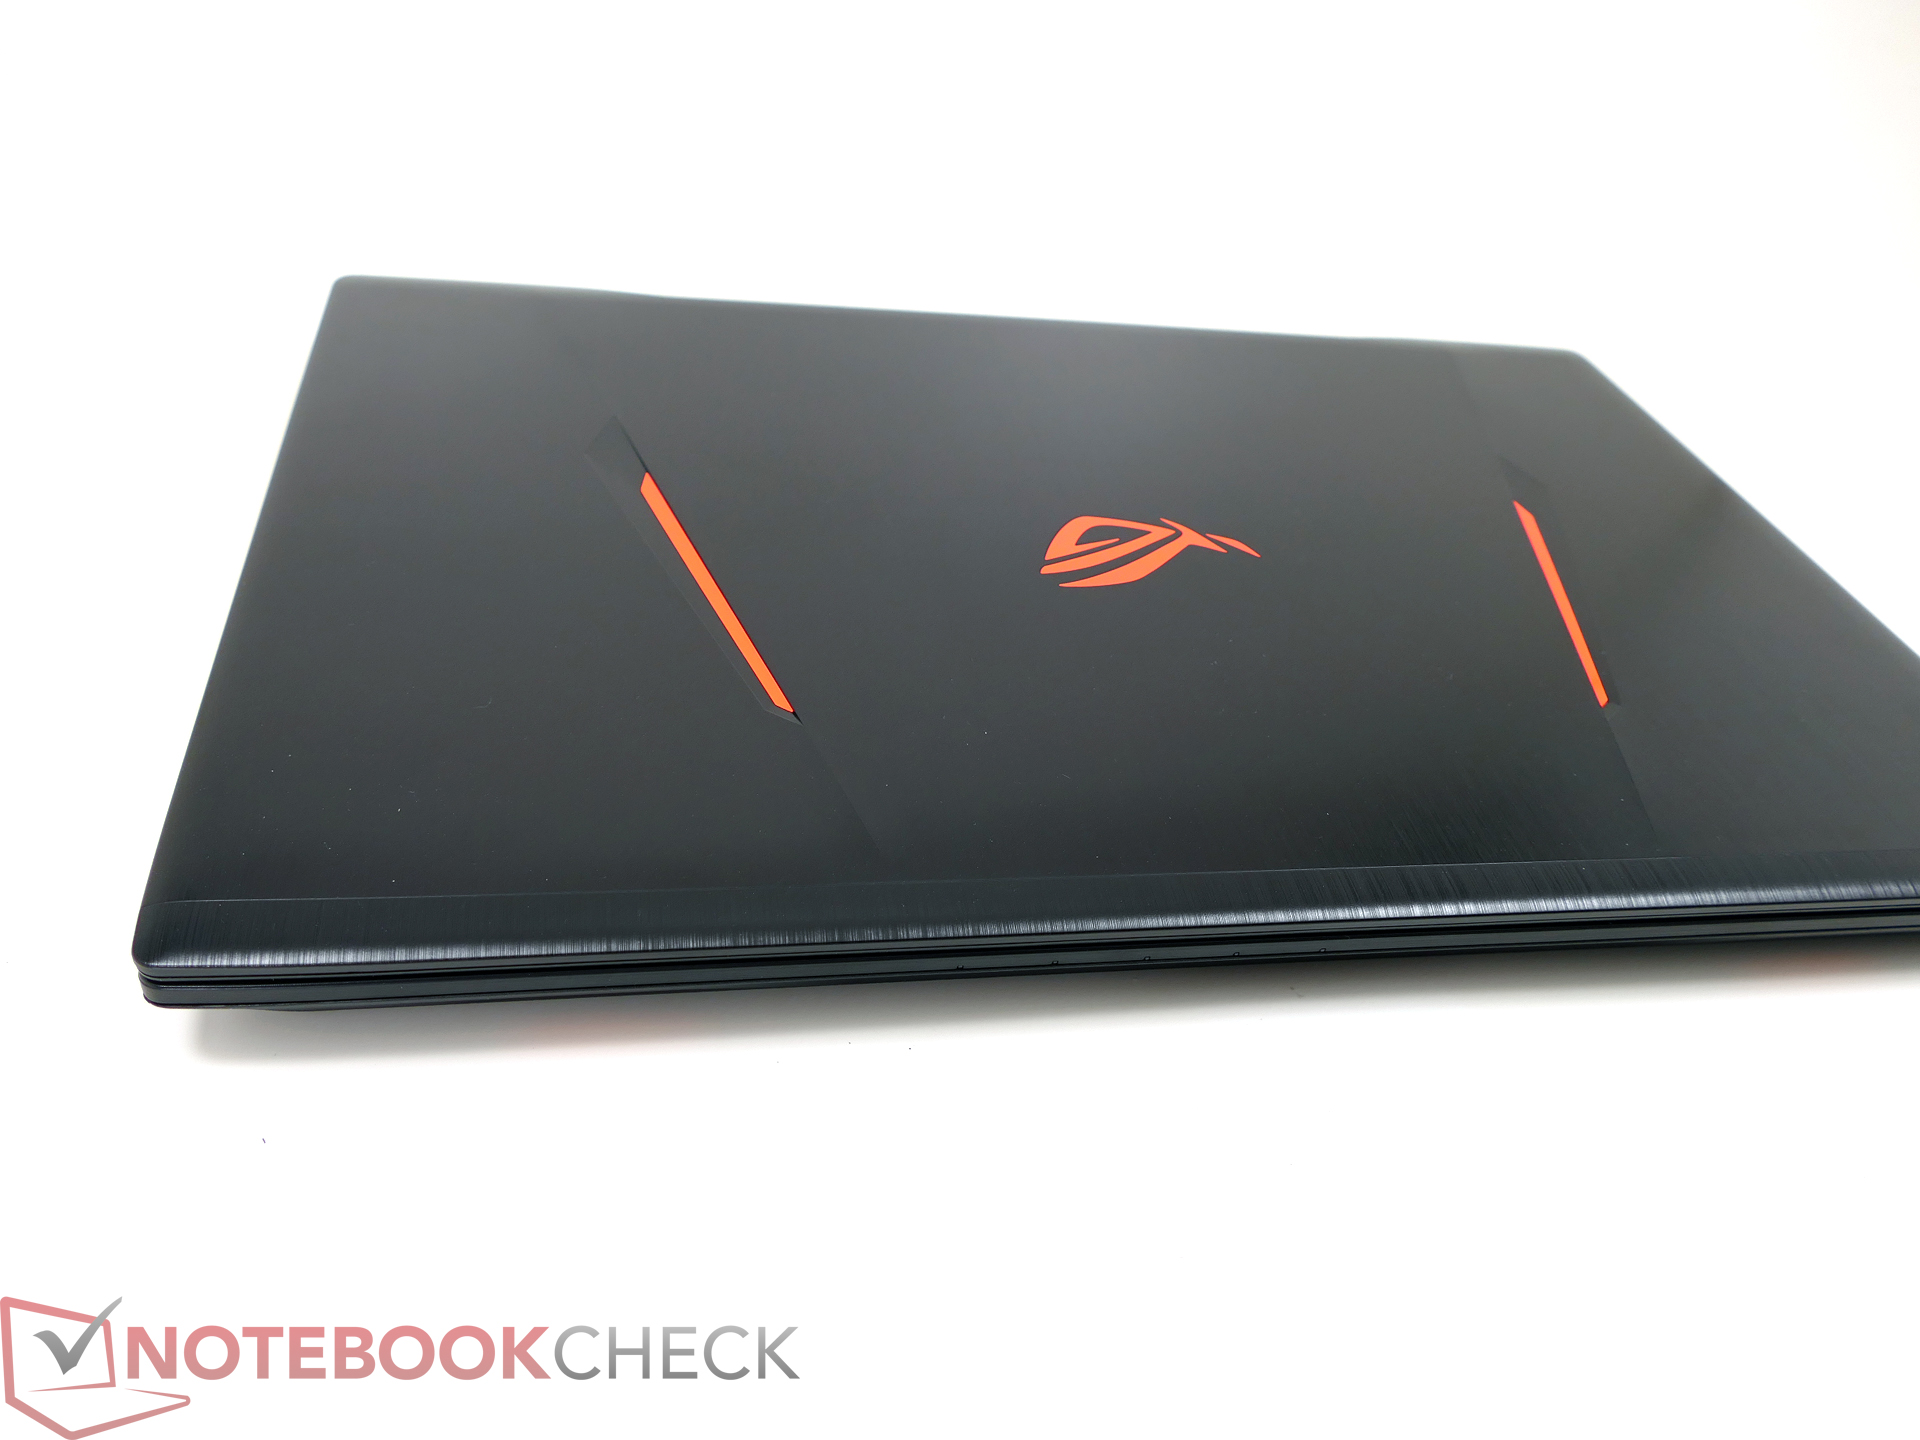 Asus ROG Strix GL753VD Notebook Review - NotebookCheck.net Reviews